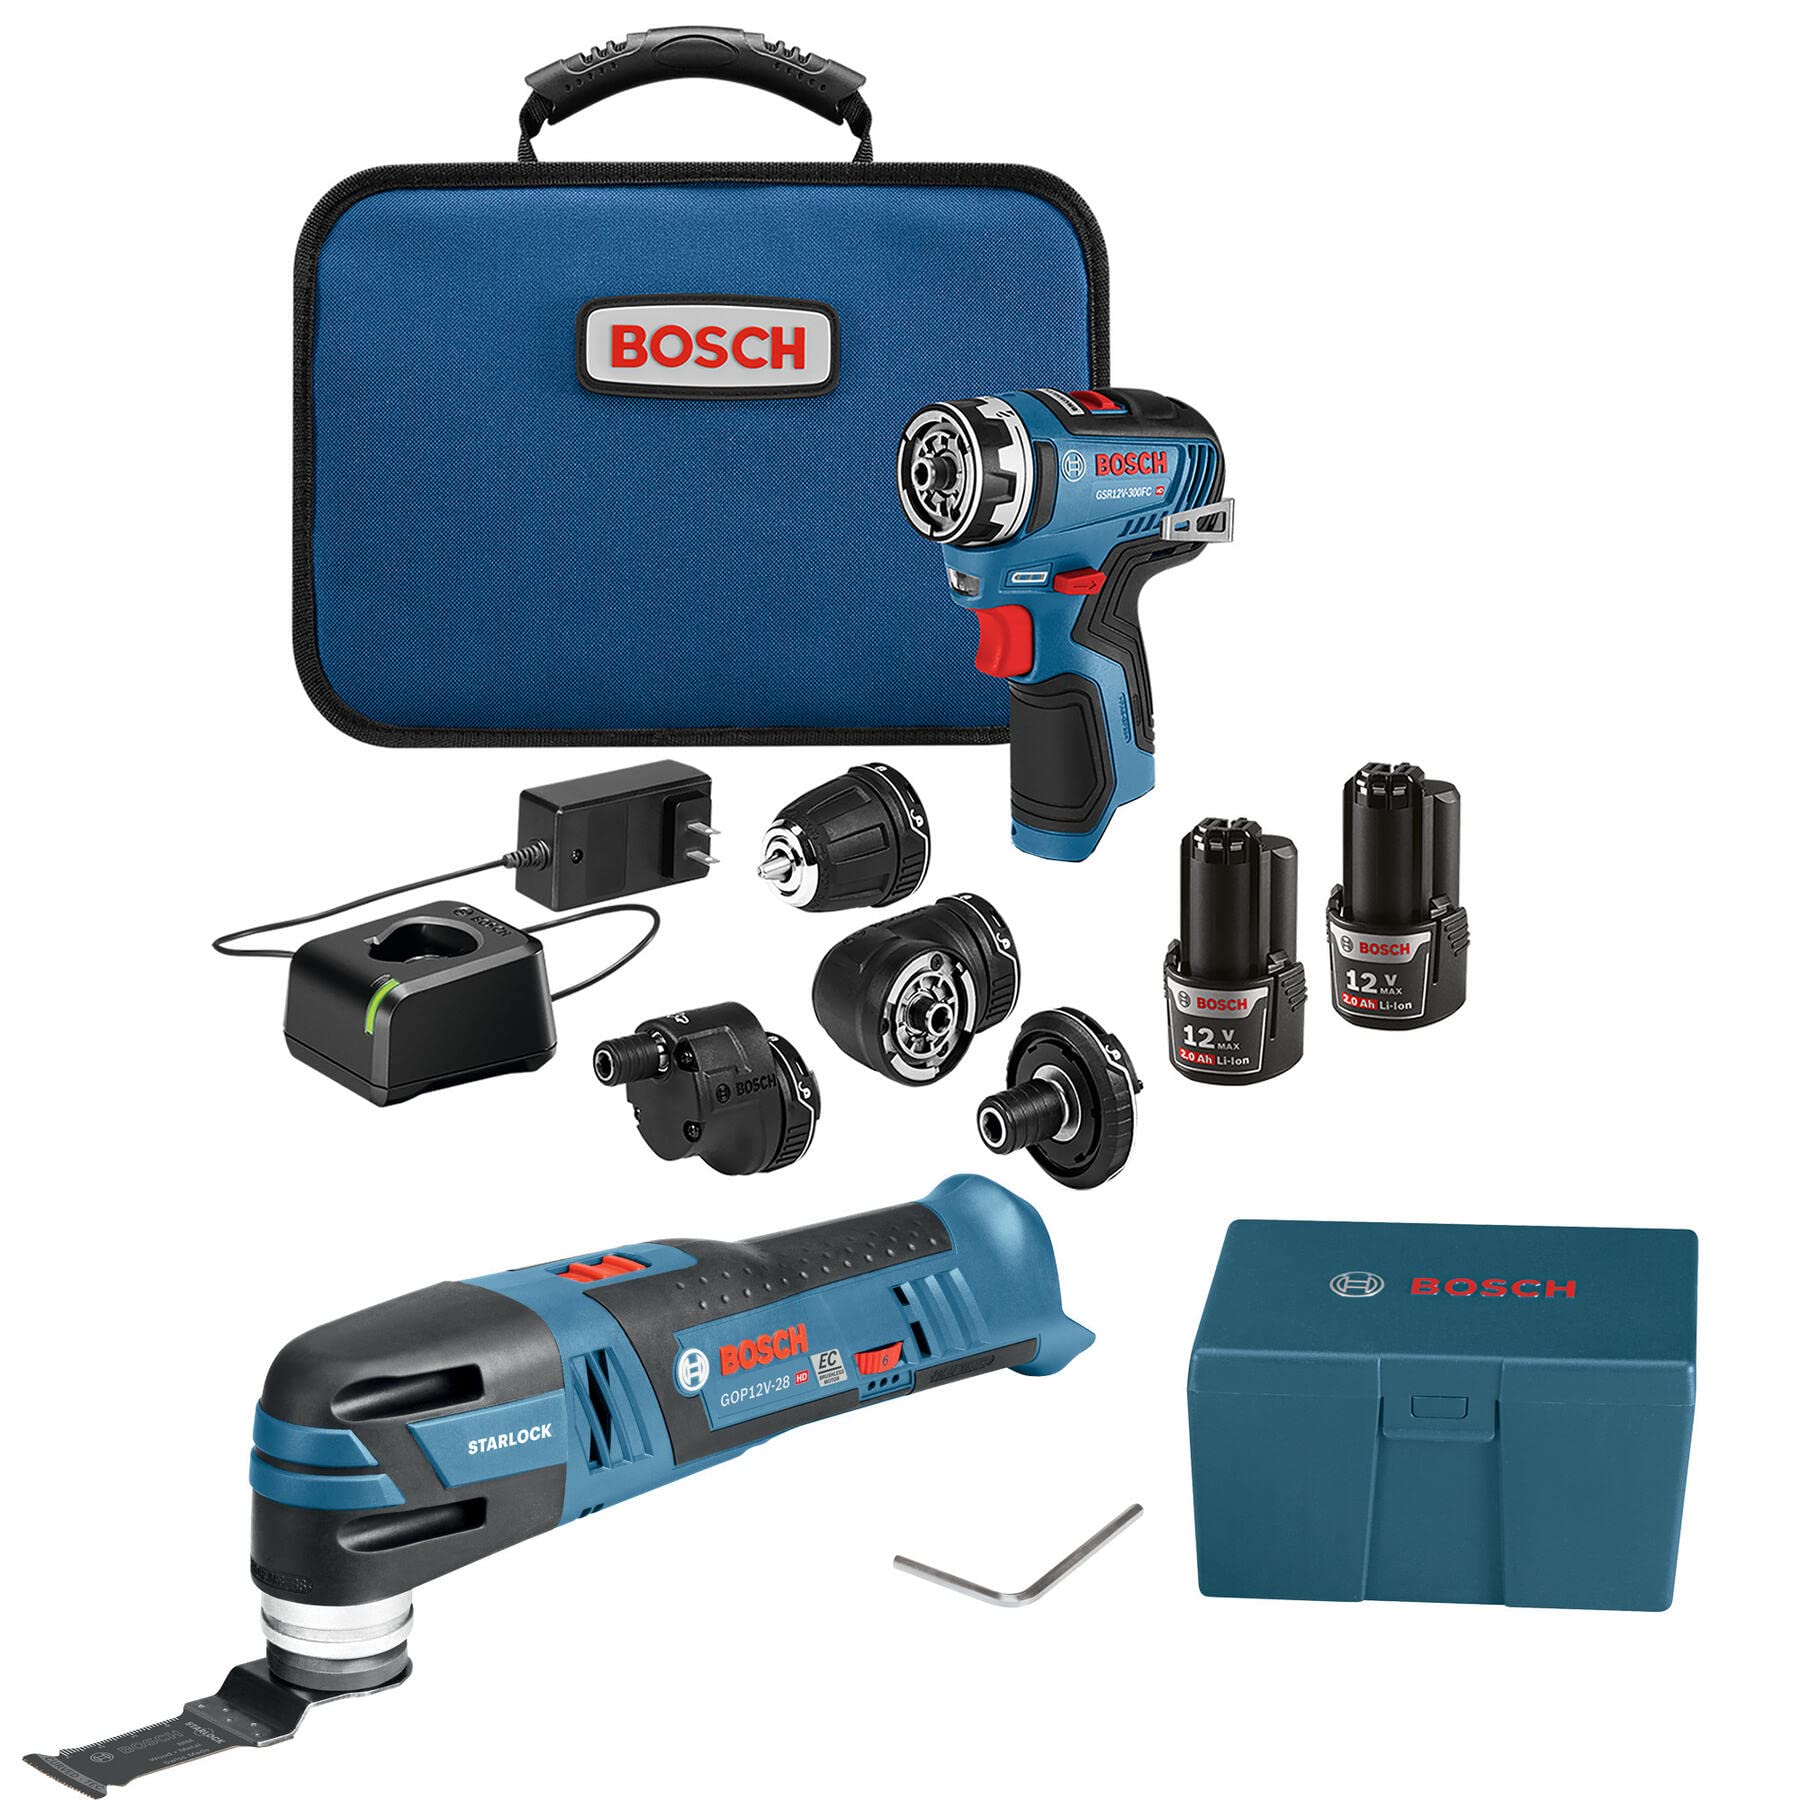 12-Volt Bosch Max 2-Tool Combo Kit w/ Chameleon Drill/Driver & Oscillating Multi-Tool $149 + Free Shipping $249